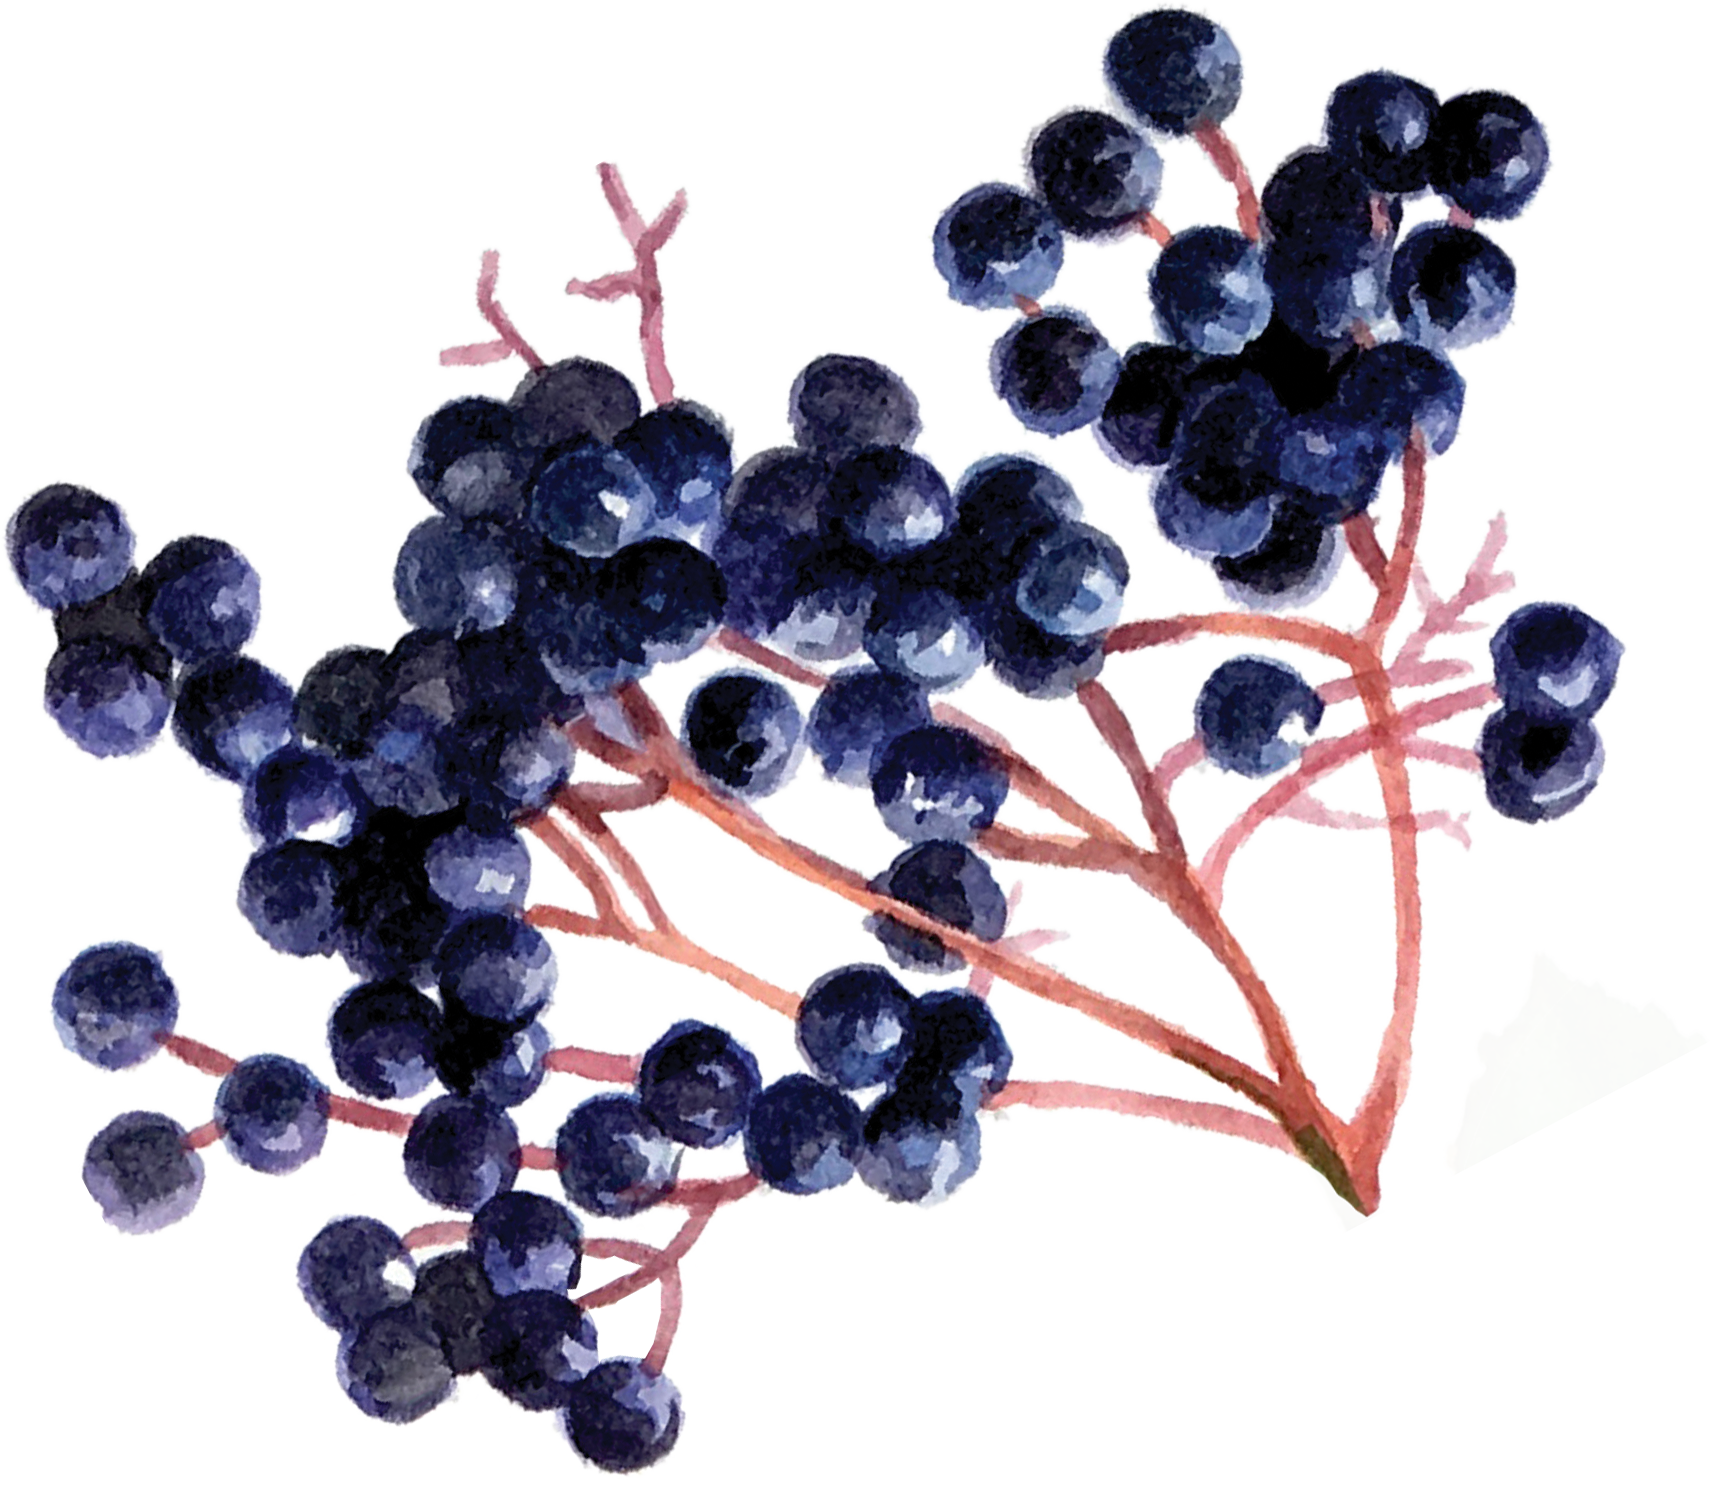 Elderberry Goodness